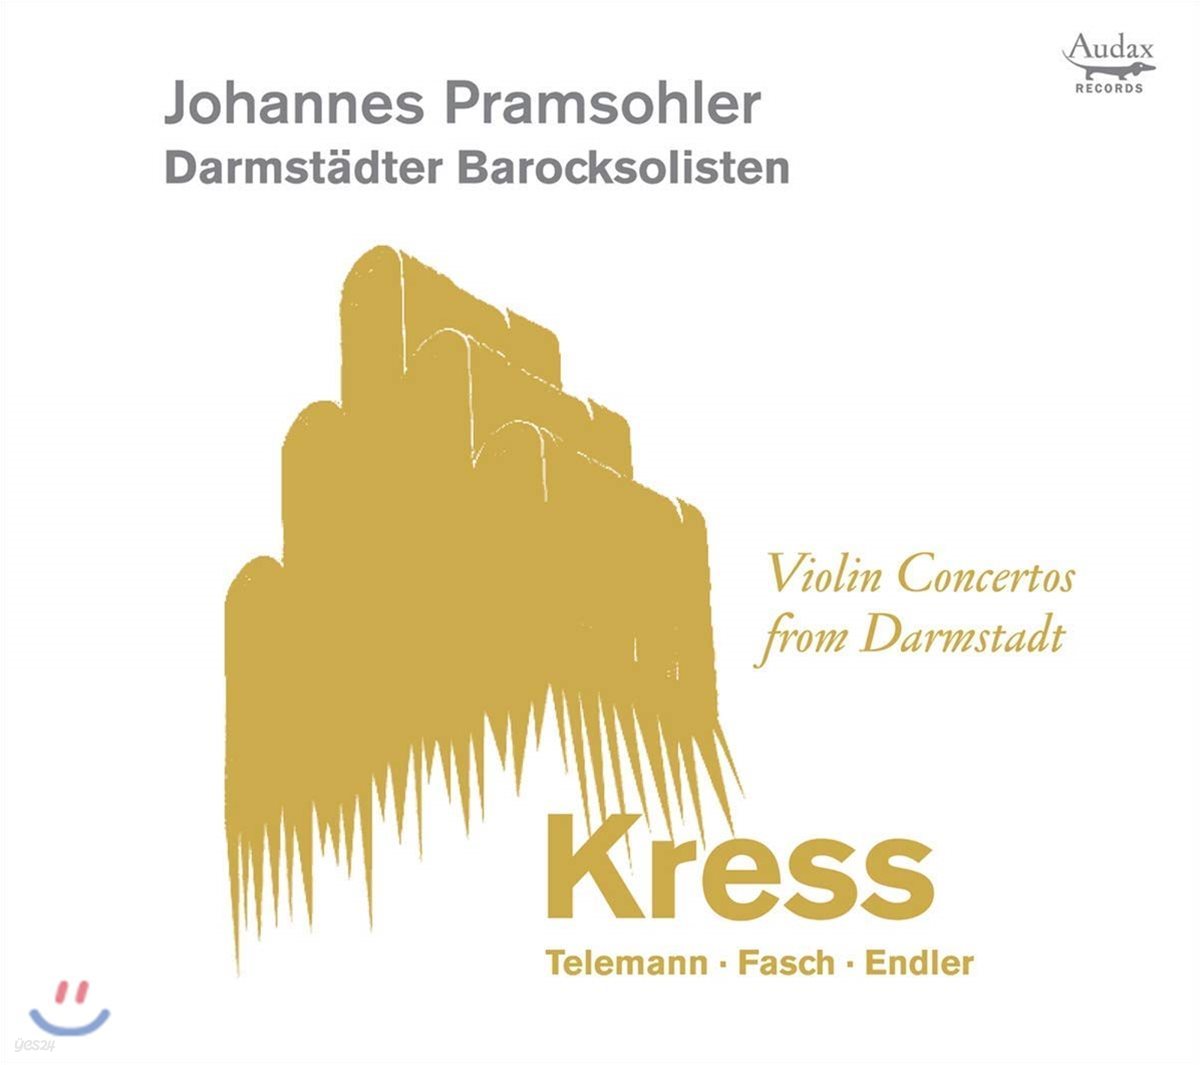 Johannes Pramsohler 다름슈타트의 바이올린 협주곡집 (Violin Concertos from Darmstadt)